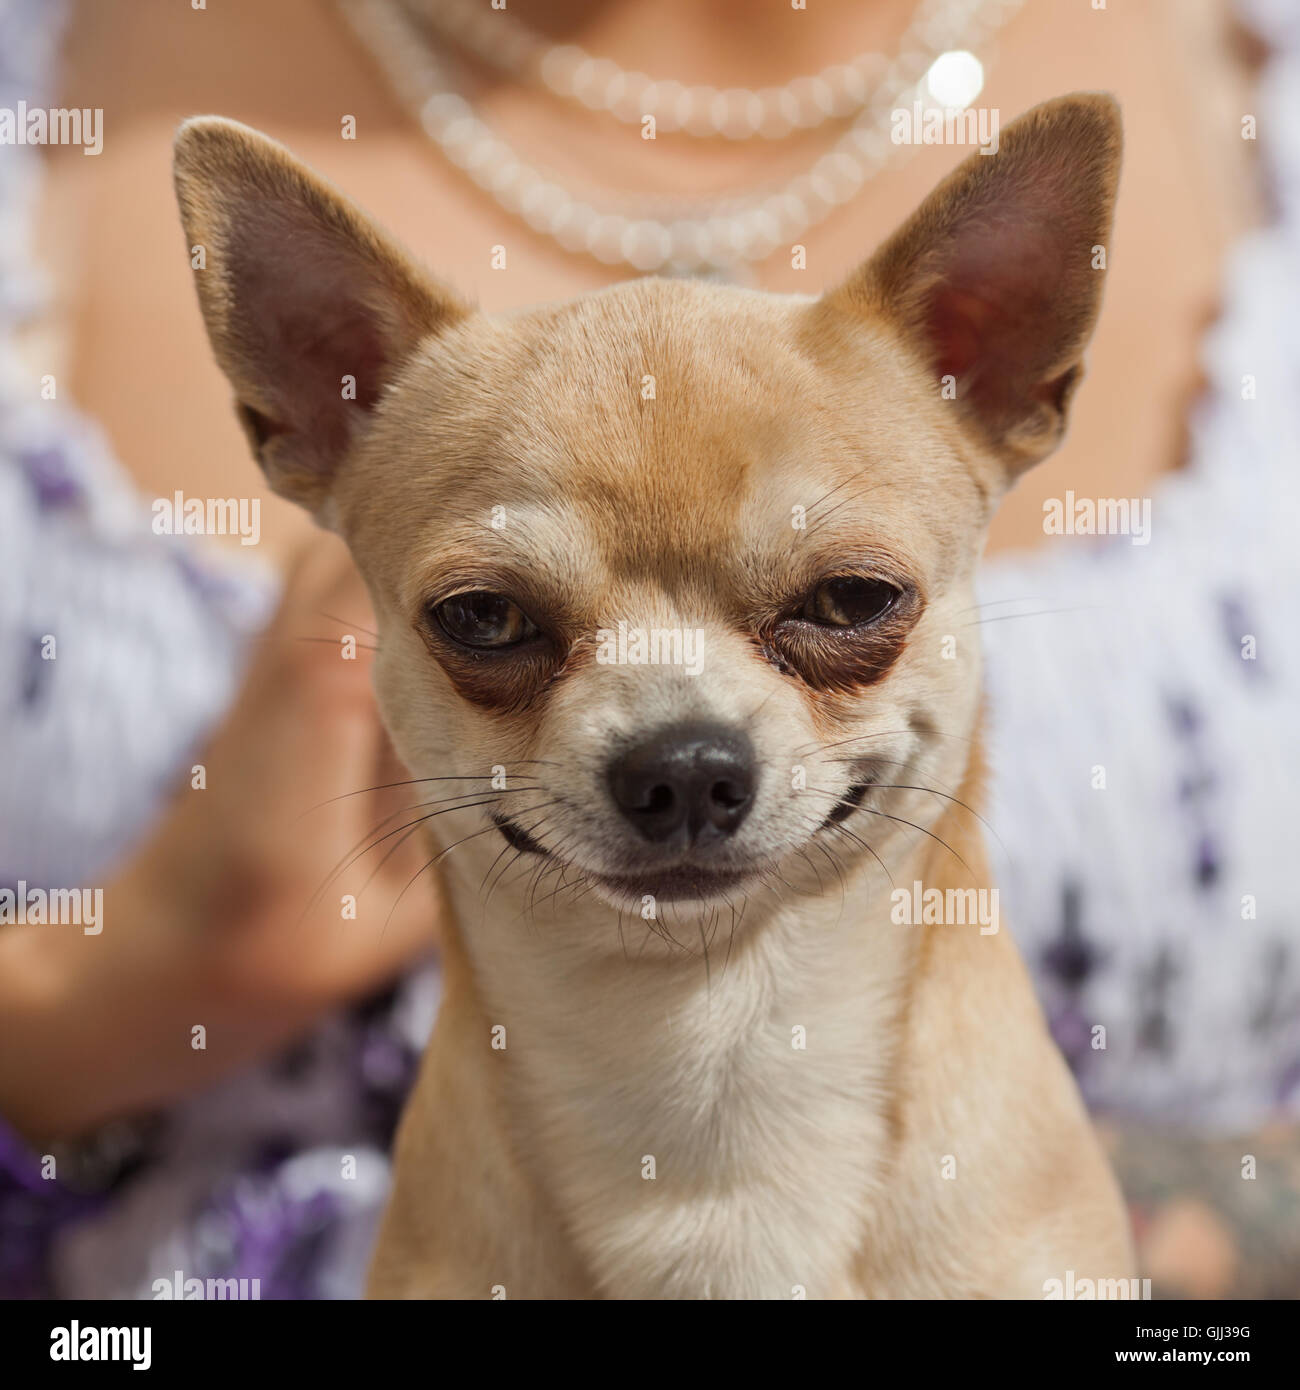 cute smiling chihuahua dog Stock Photo